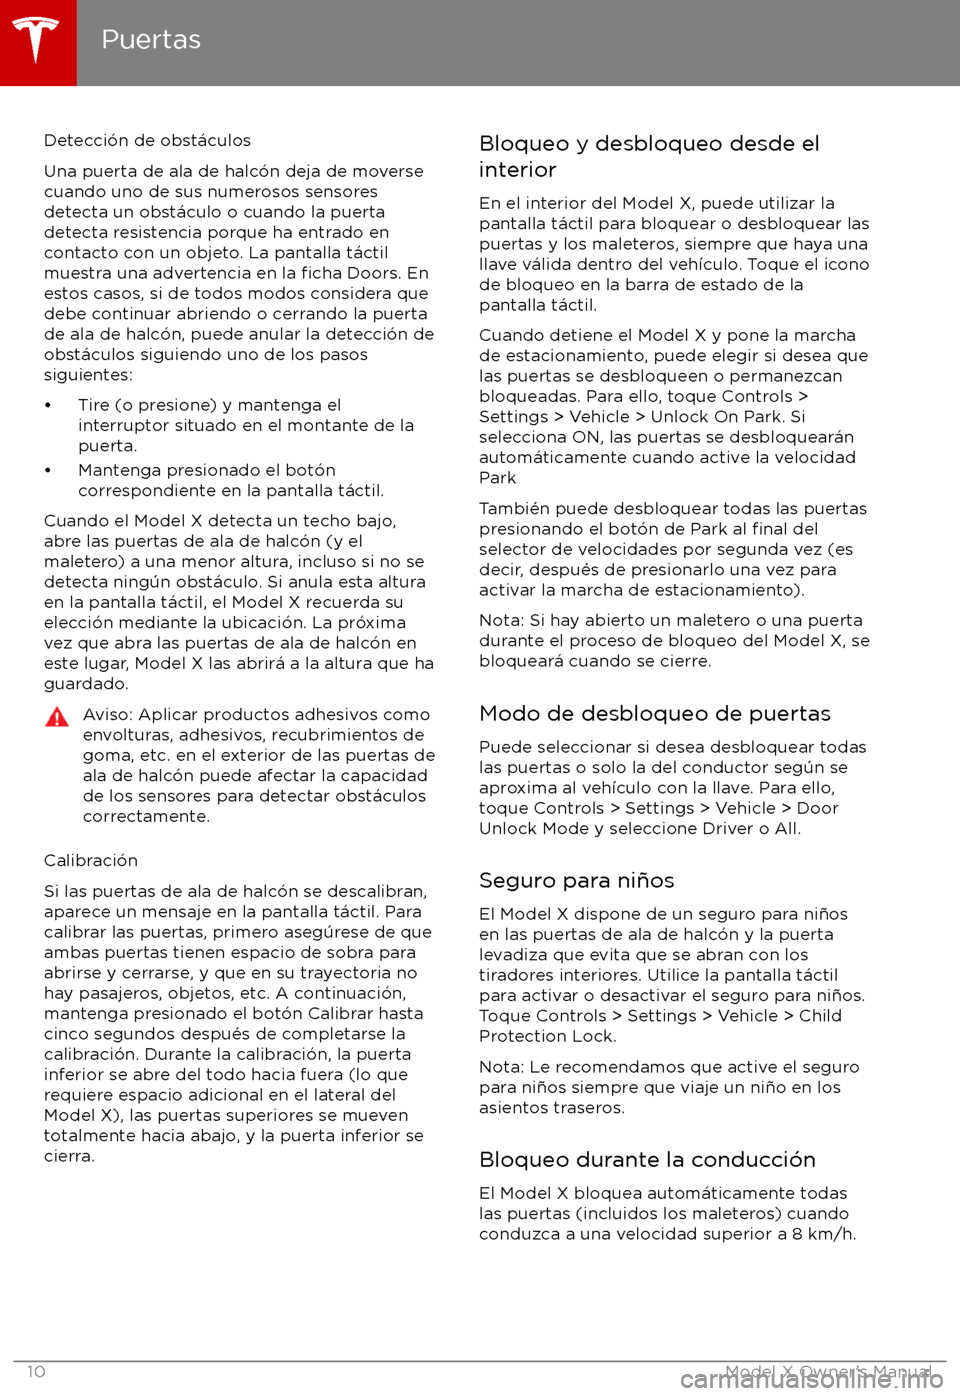 TESLA MODEL X 2017  Manual del propietario (in Spanish) Detecci